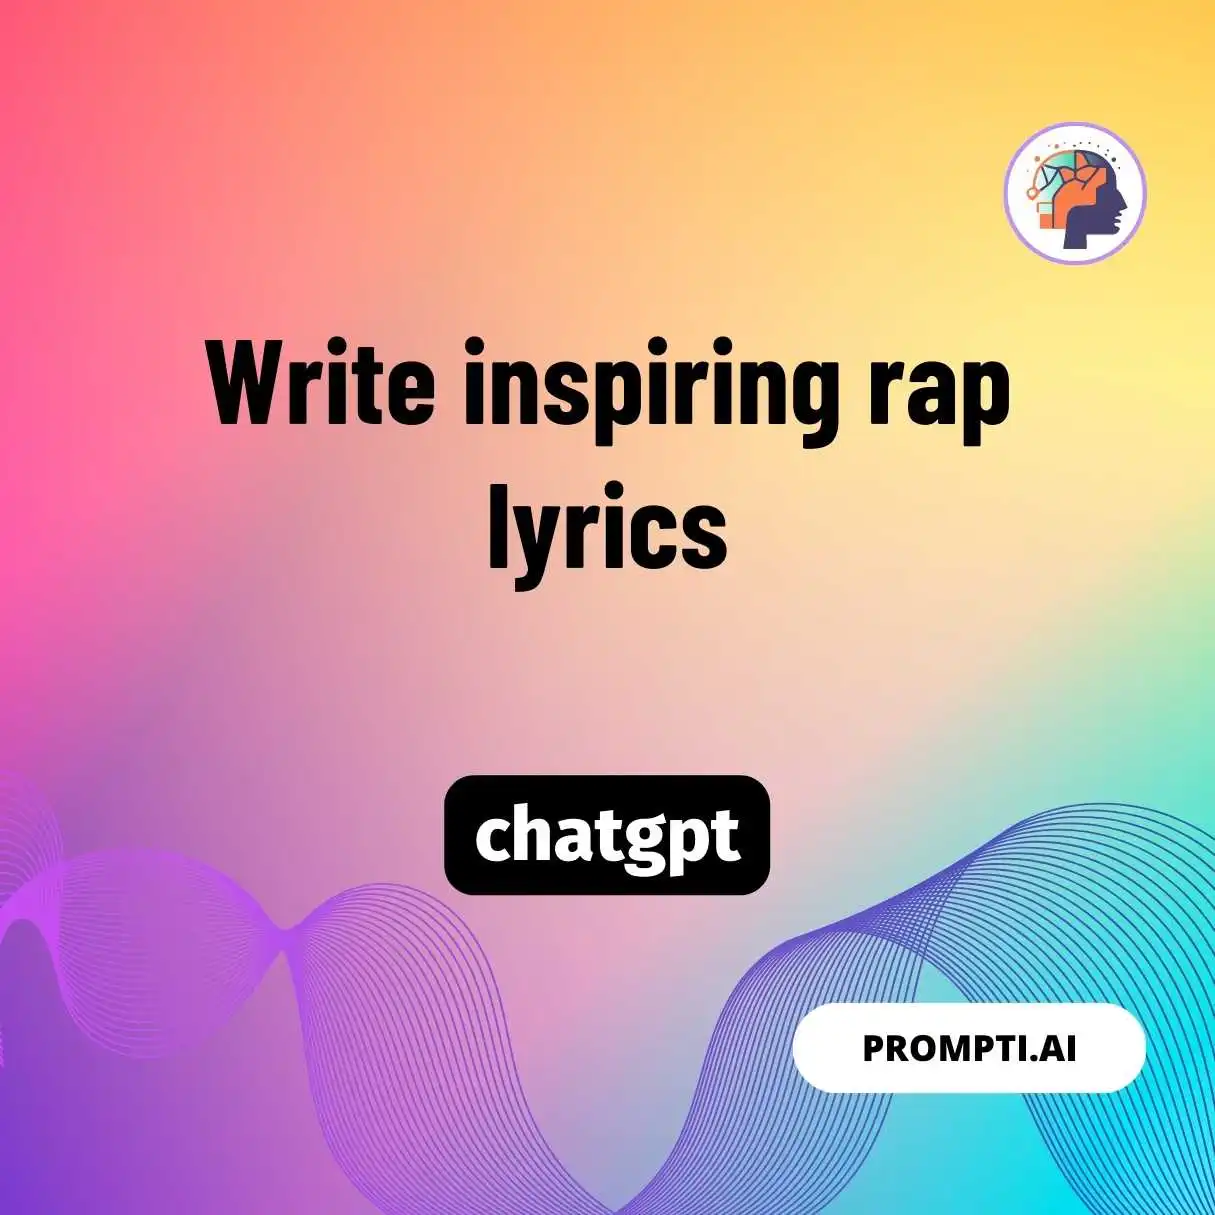 Write inspiring rap lyrics